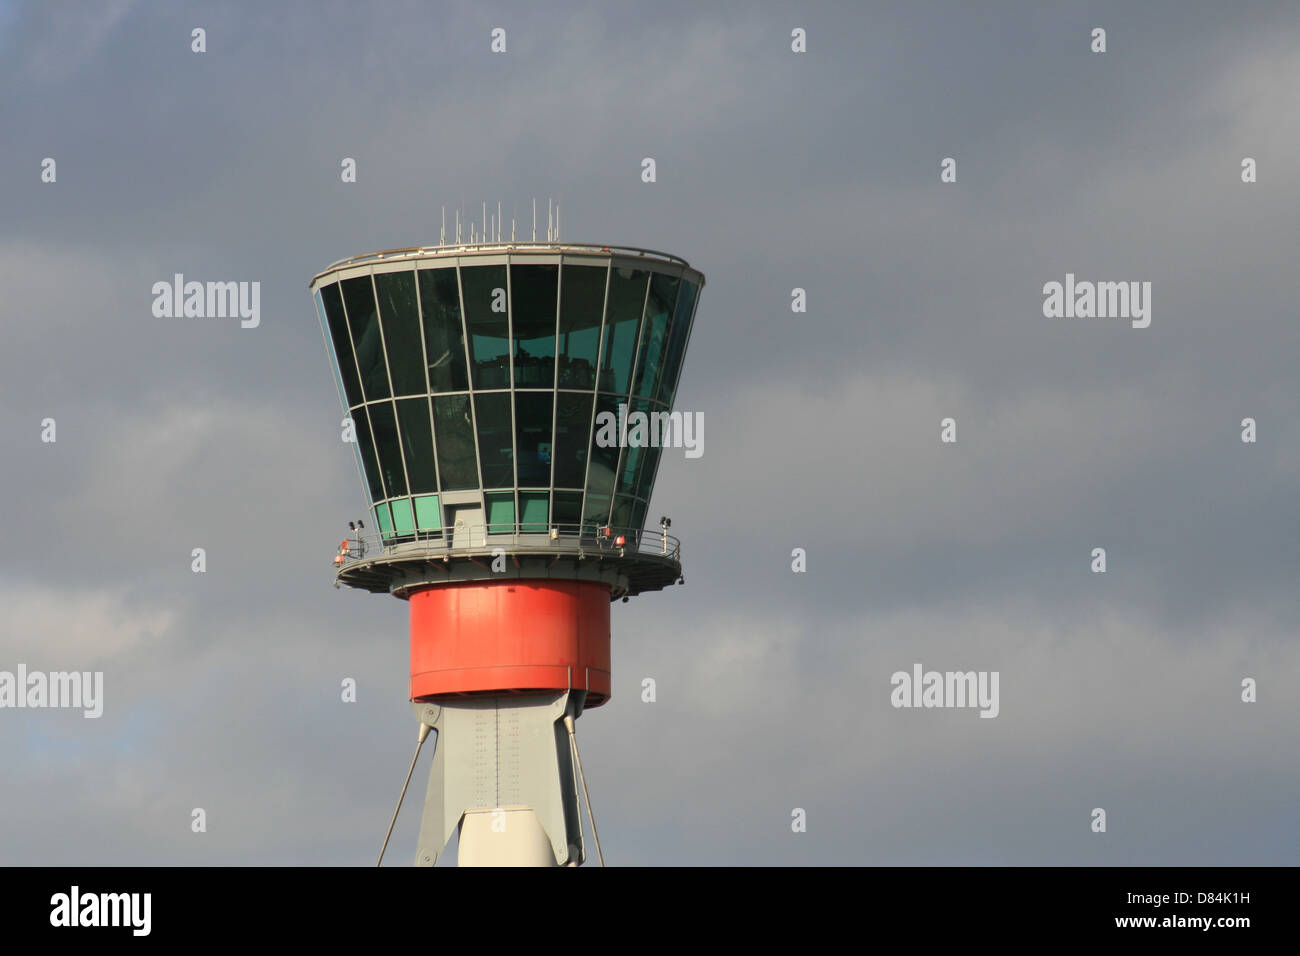 AIR TRAFFIC CONTROL TOWER HEATHROW AIRPORT Stock Photo